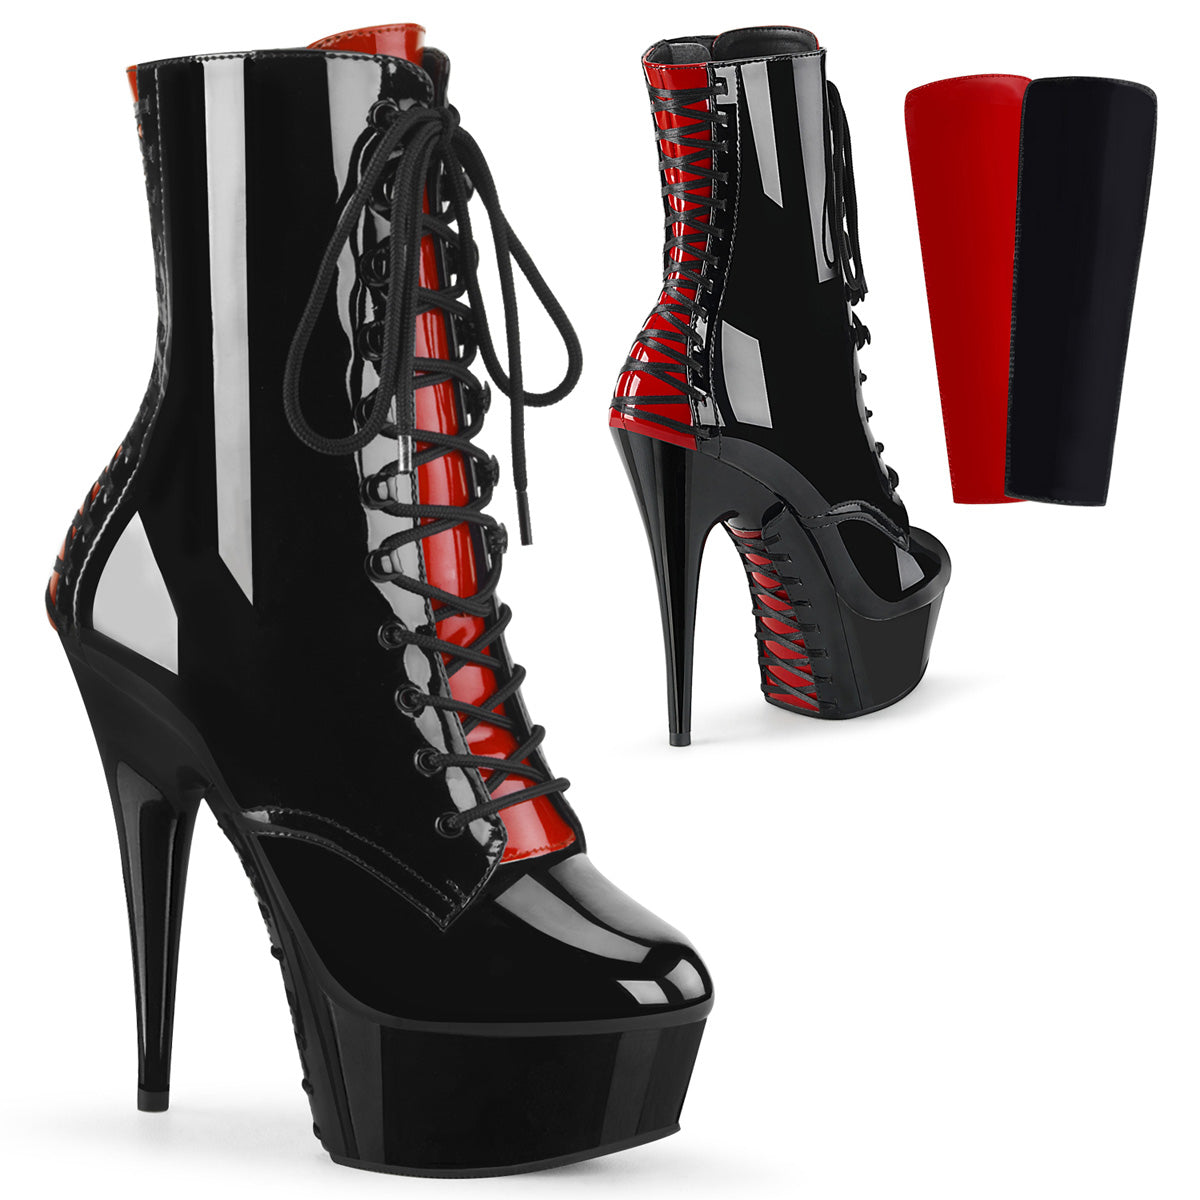 DELIGHT-1020FH 6" Heel Black Patent  Stripper Platforms High Heels